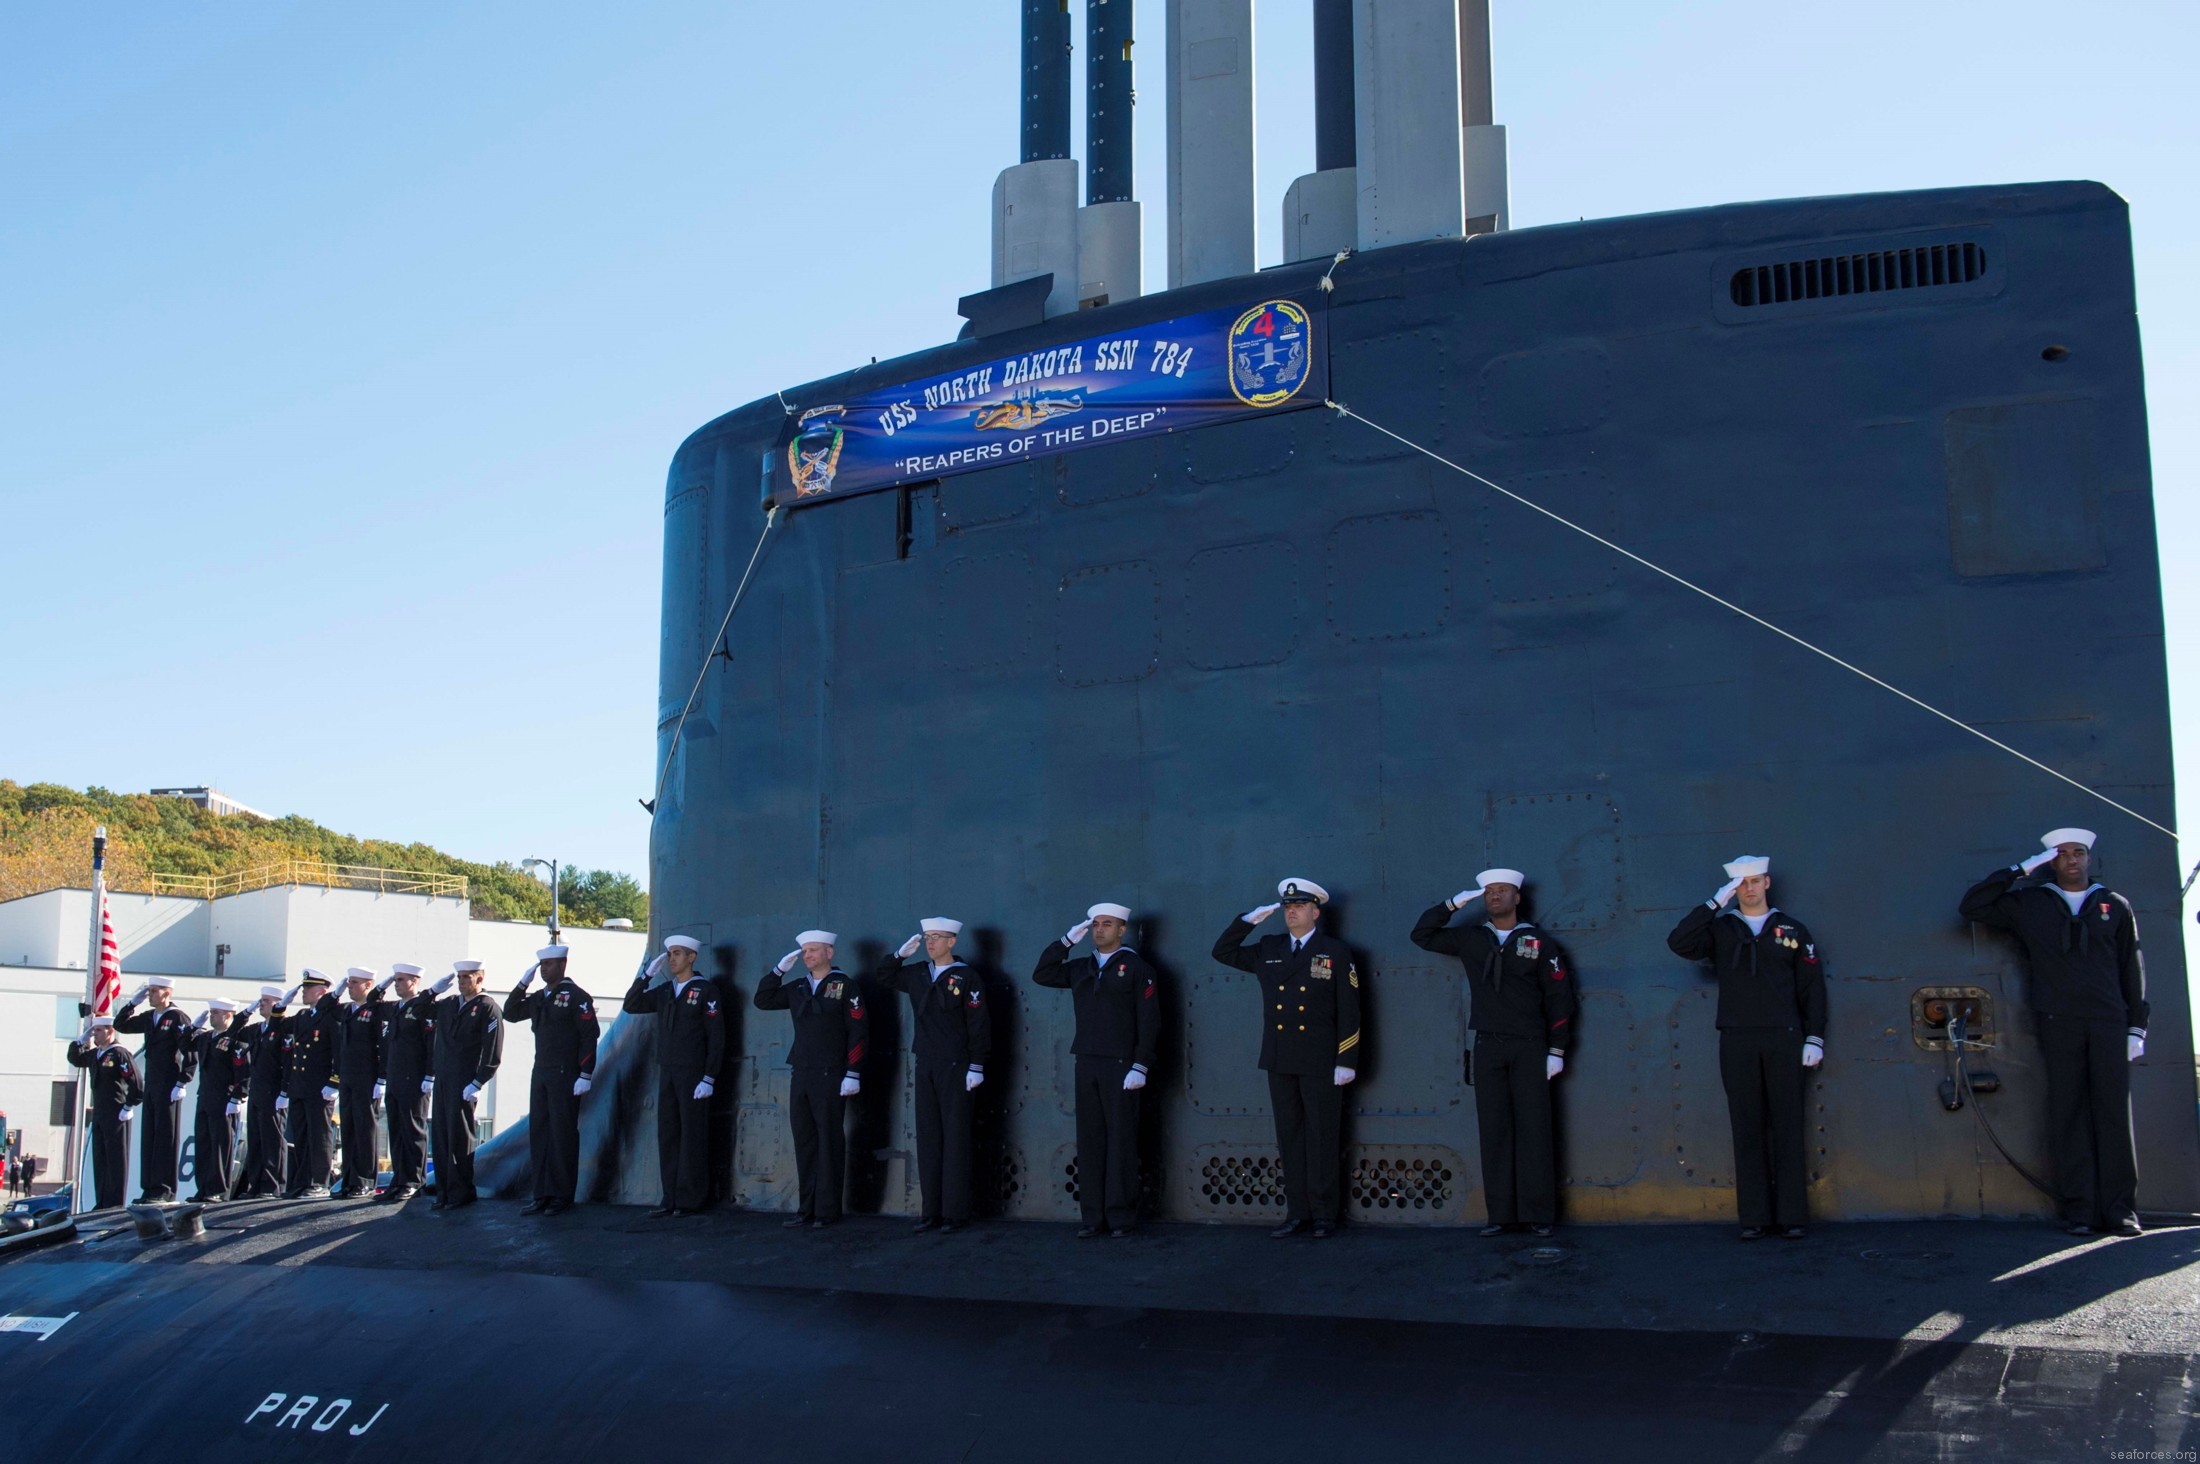 ssn-784 uss north dakota virginia class attack submarine us navy 04 commissioning ceremony